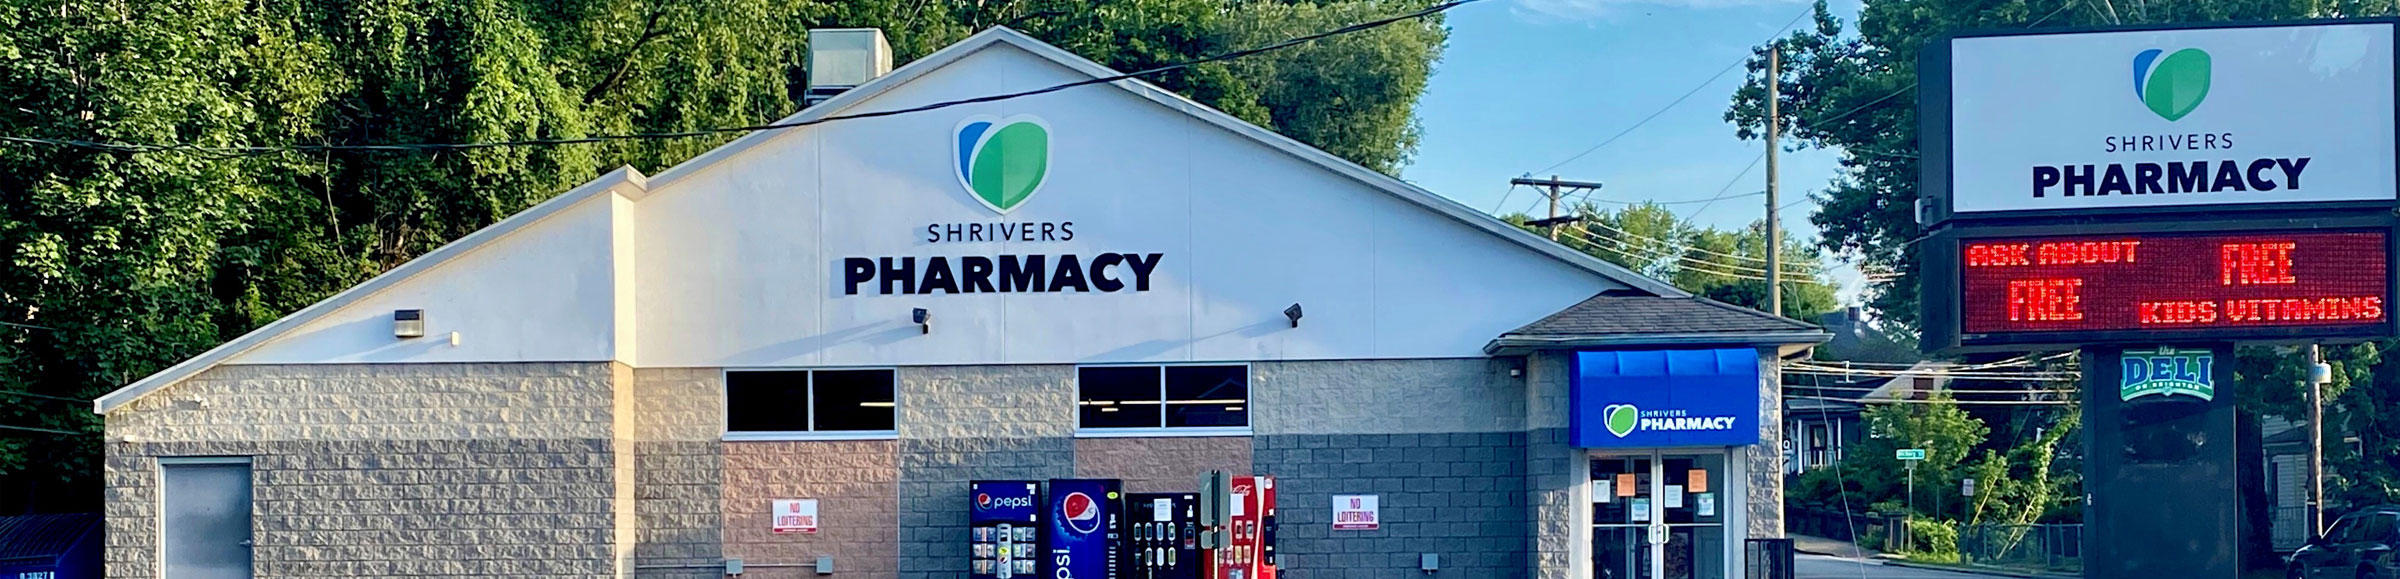 Shrivers-Pharmacy-Zanesville-Ohio-px